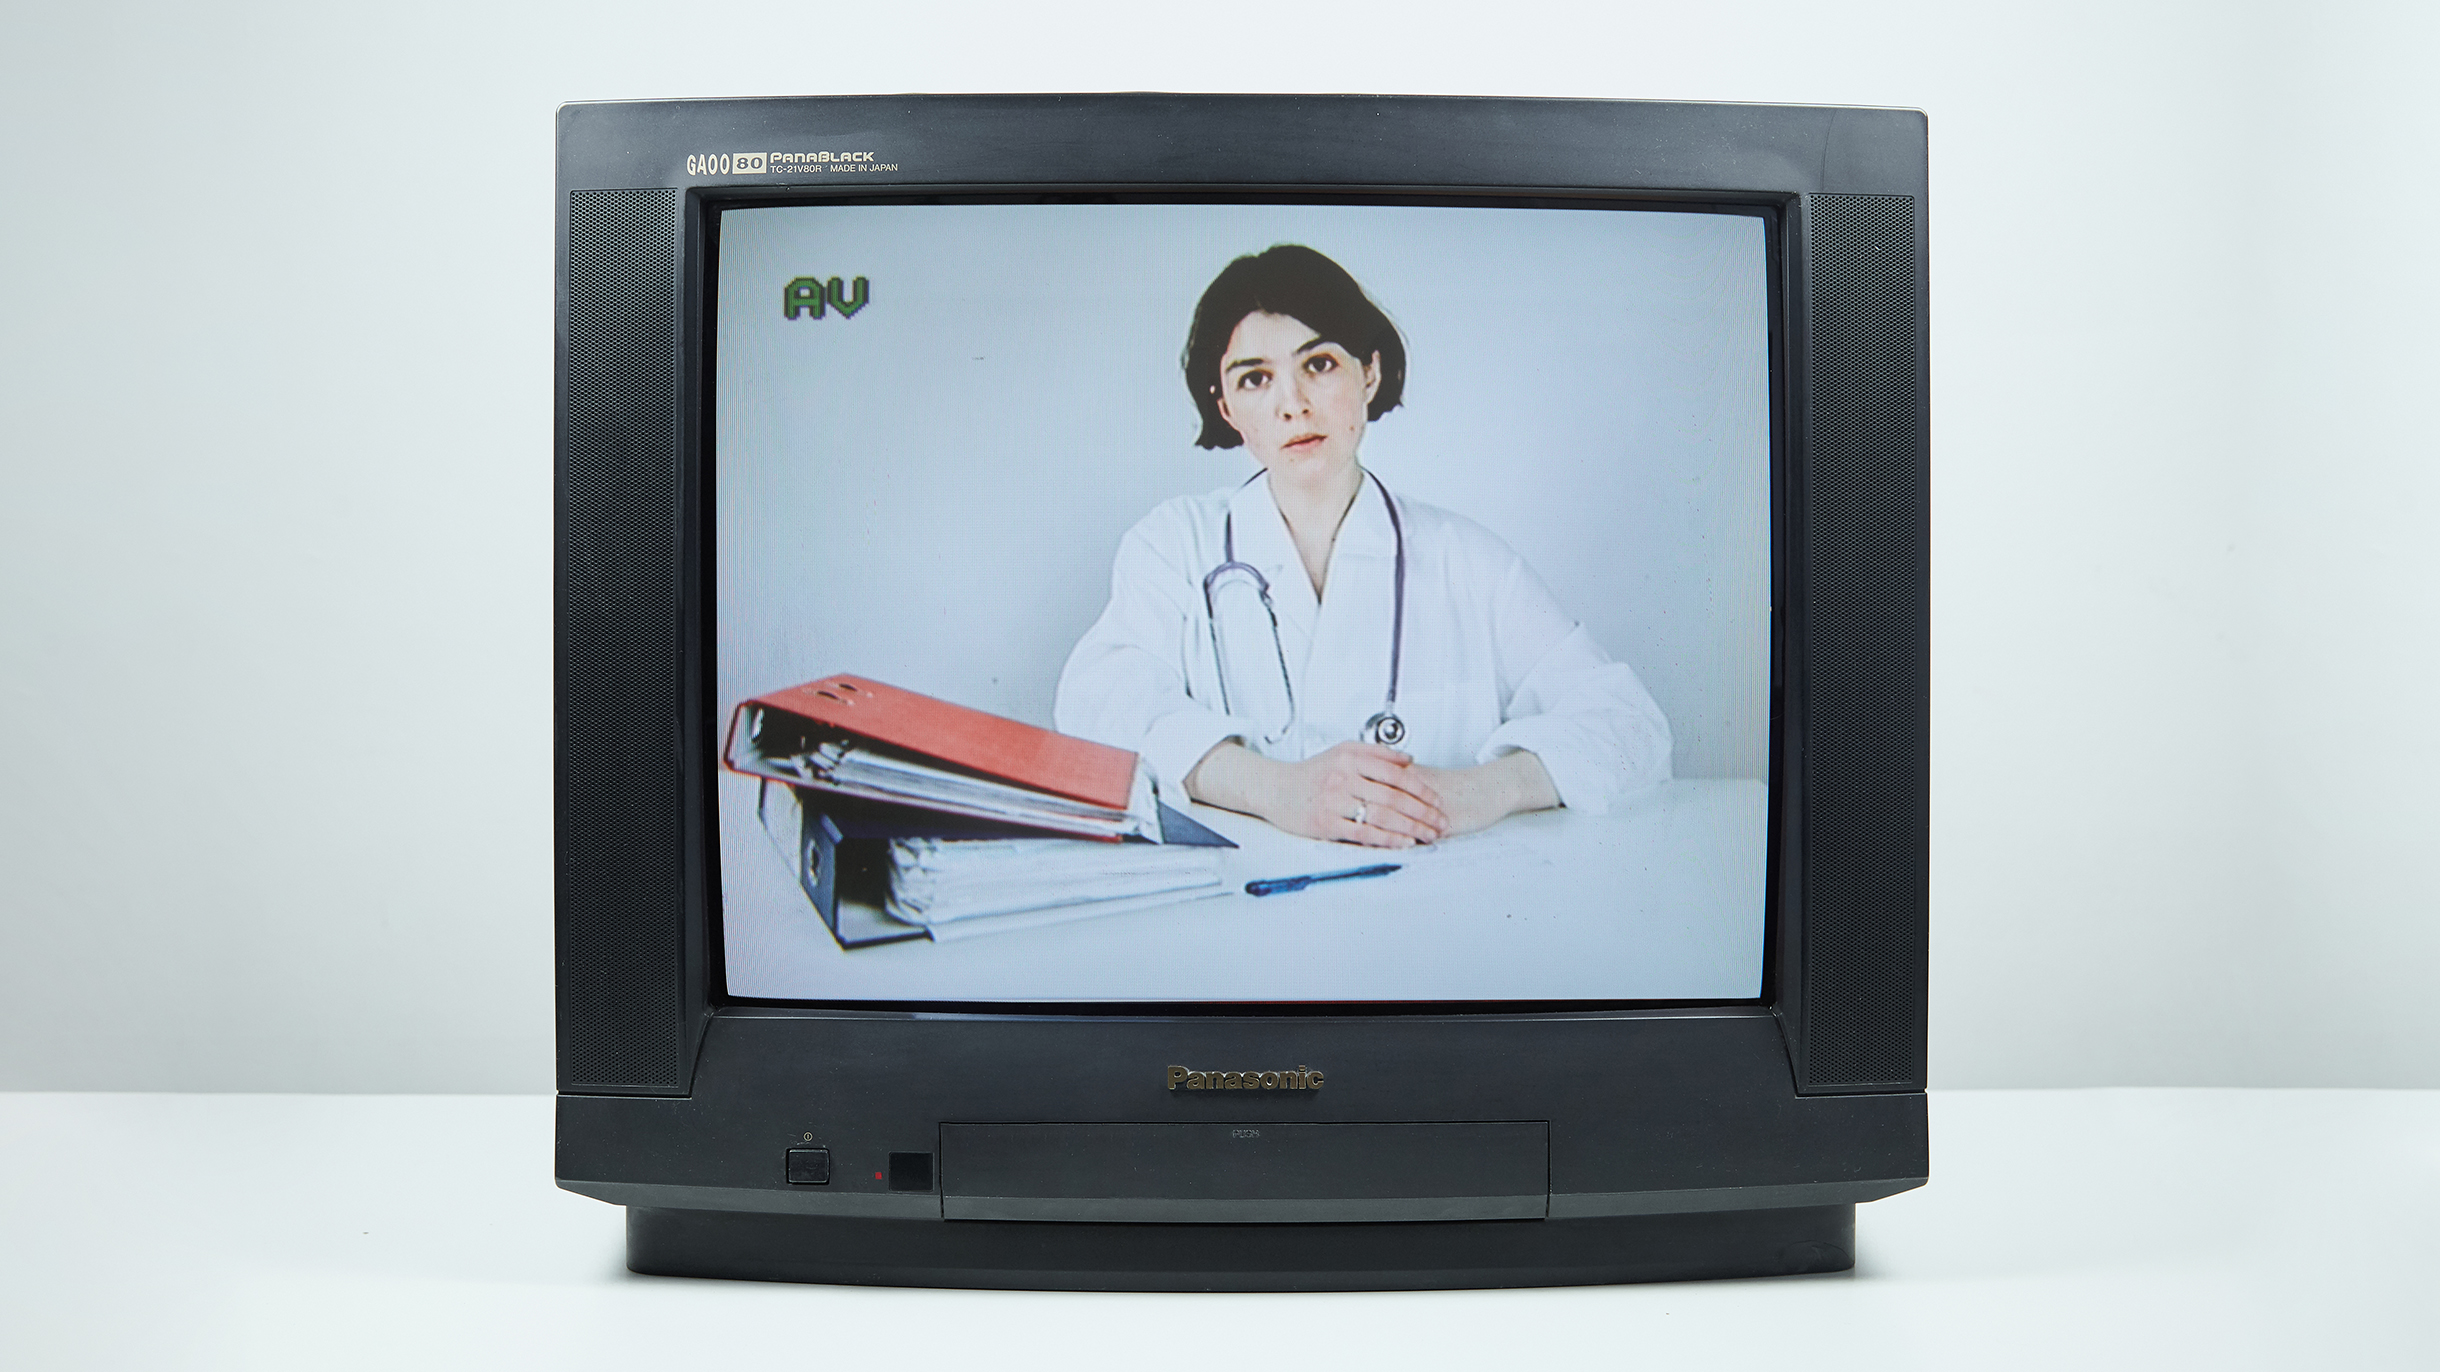 Онлайн консультация врача через интернет по телефону, skype, чату в ЕС | Video-Doc